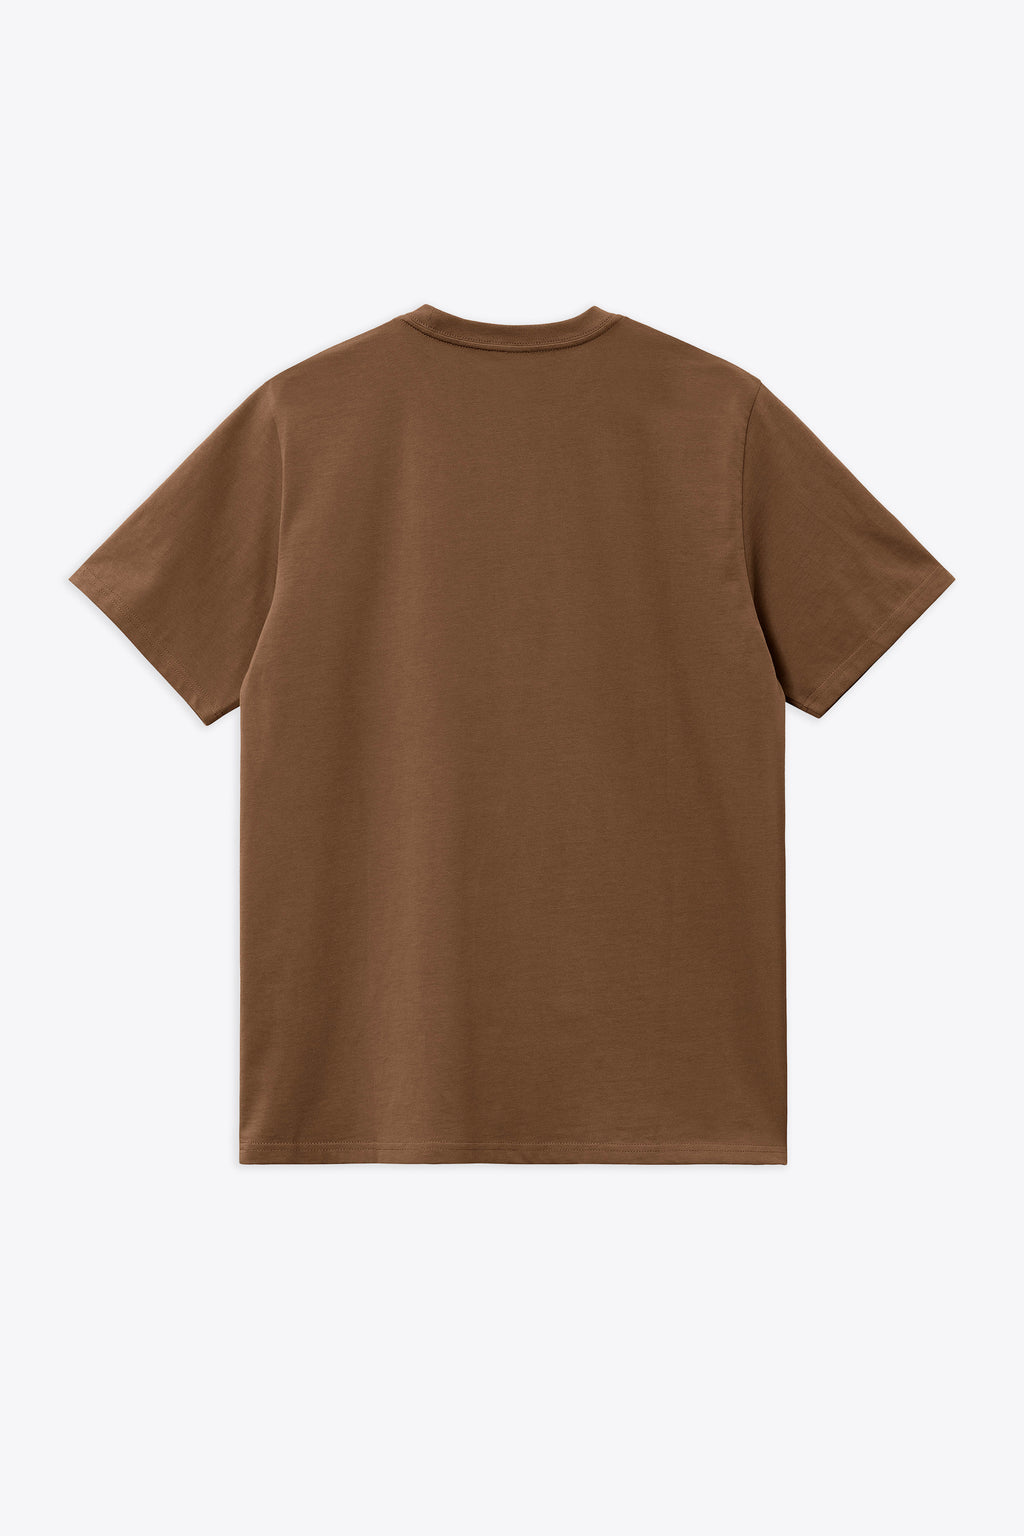 alt-image__Brown-cotton-t-shirt-with-chest-pocket---S/S-Pocket-T-Shirt-